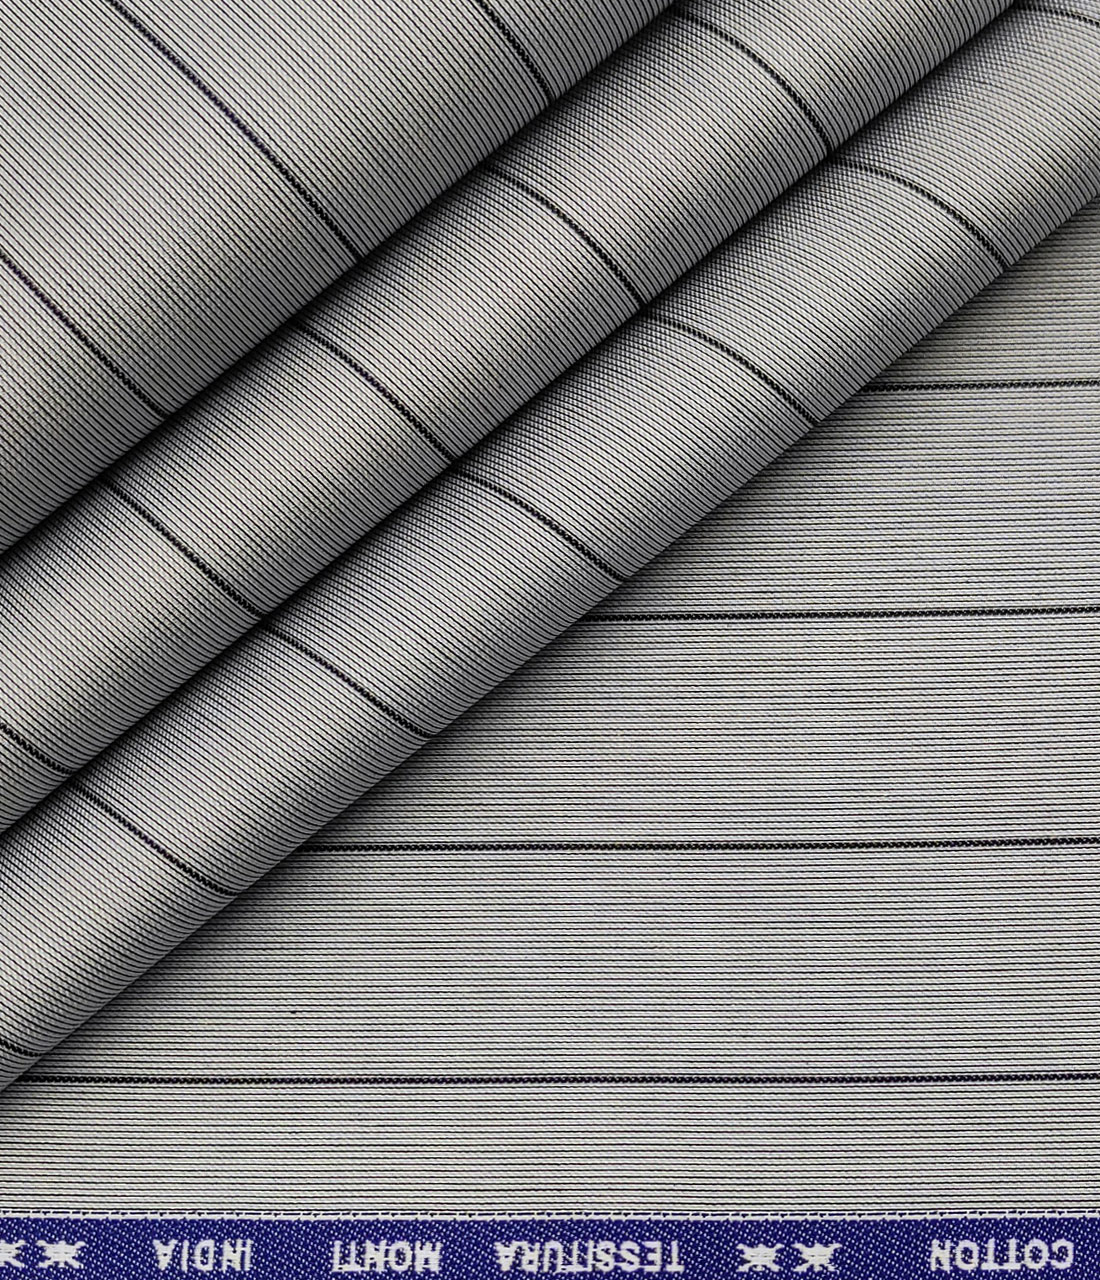 Tessitura Monti Men's Giza Cotton Striped 2 Meter Unstitched Shirting Fabric (Light Grey)